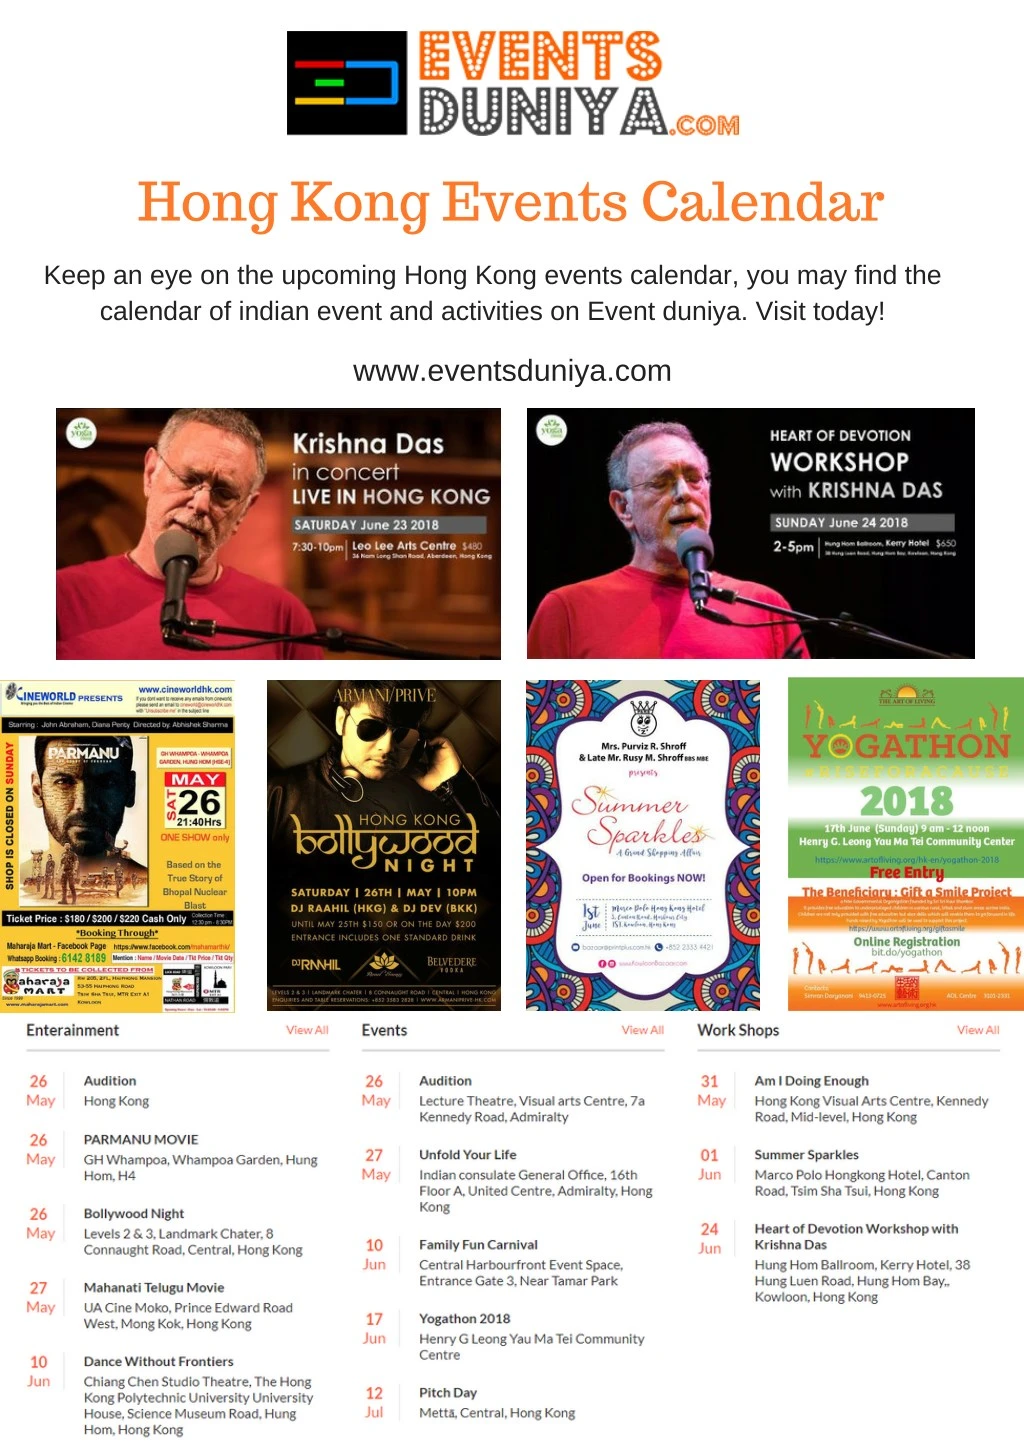 PPT Hong Kong Events Calendar PowerPoint Presentation, free download